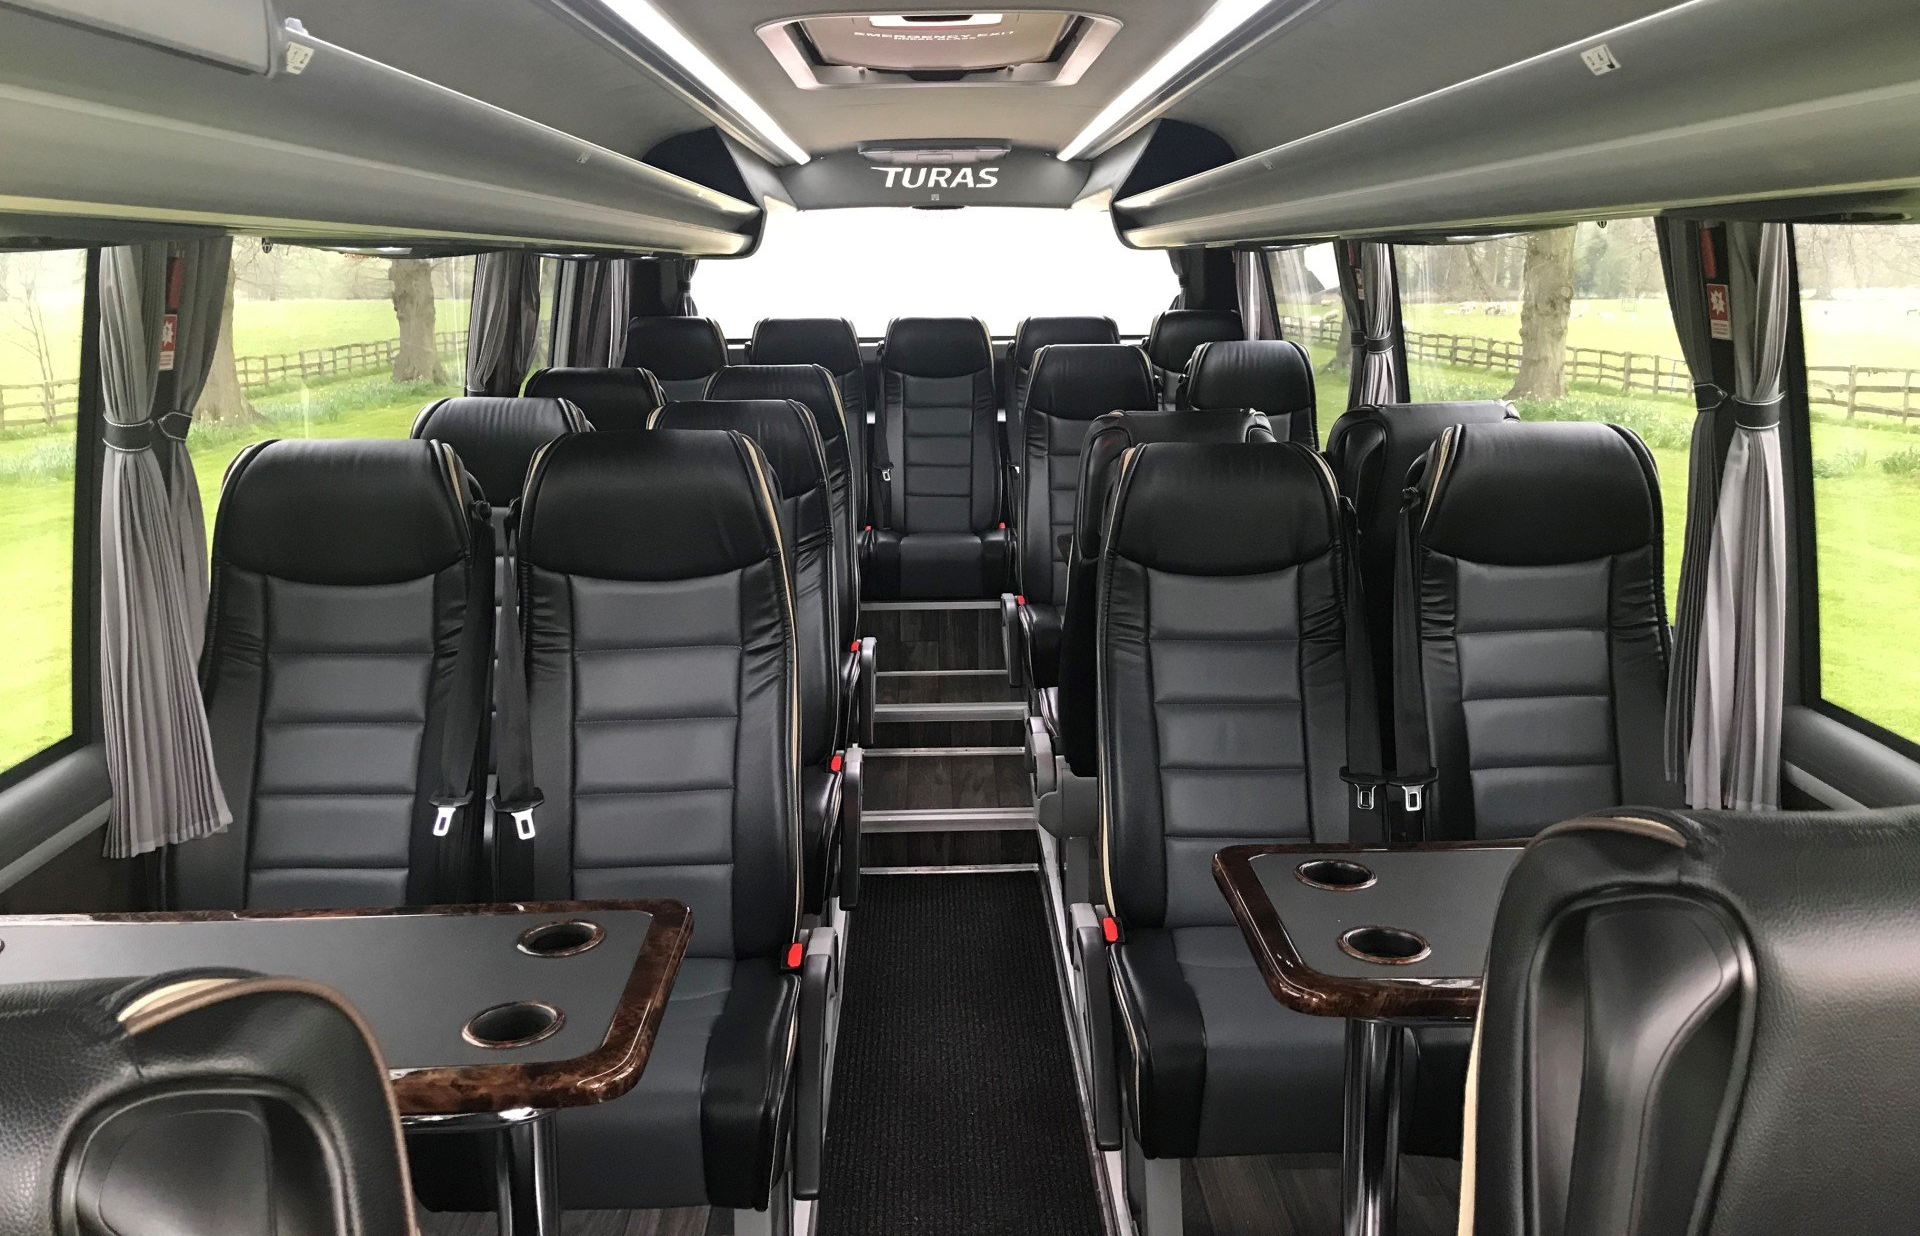 Our Luxury 21 Seat Midi-Coach interior